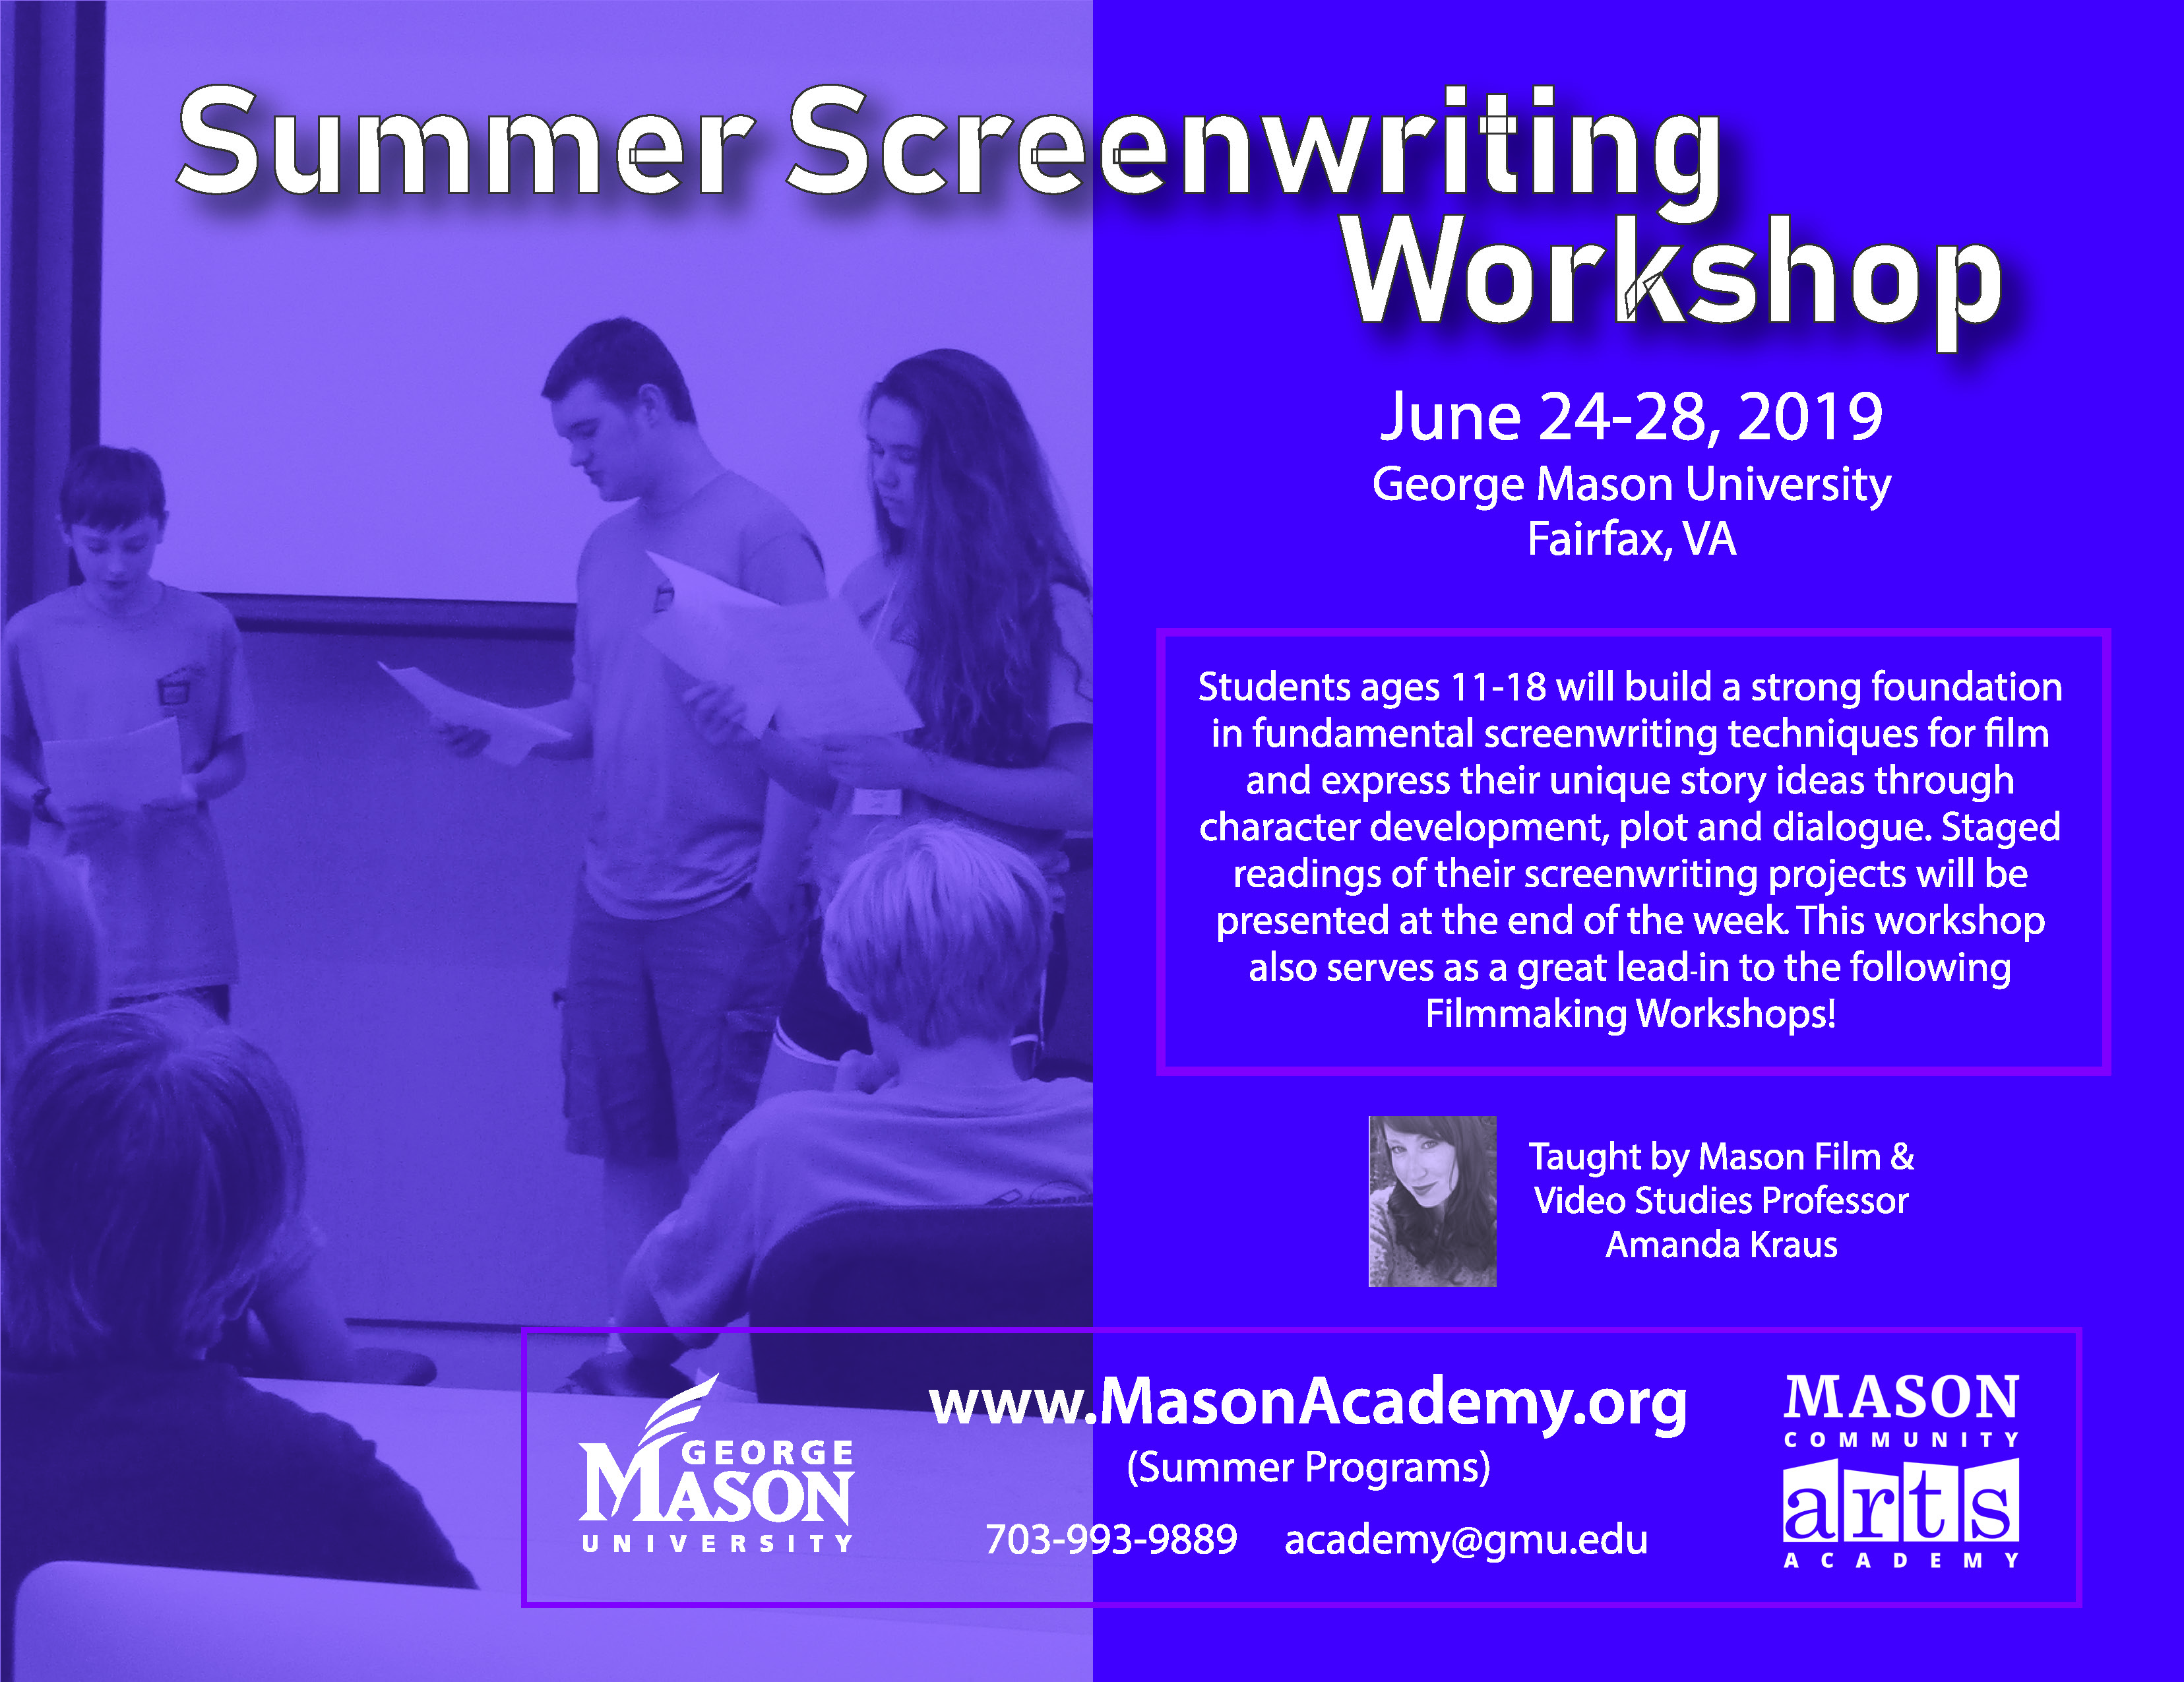 Summer Screenwriting Workshop 2019 Flier